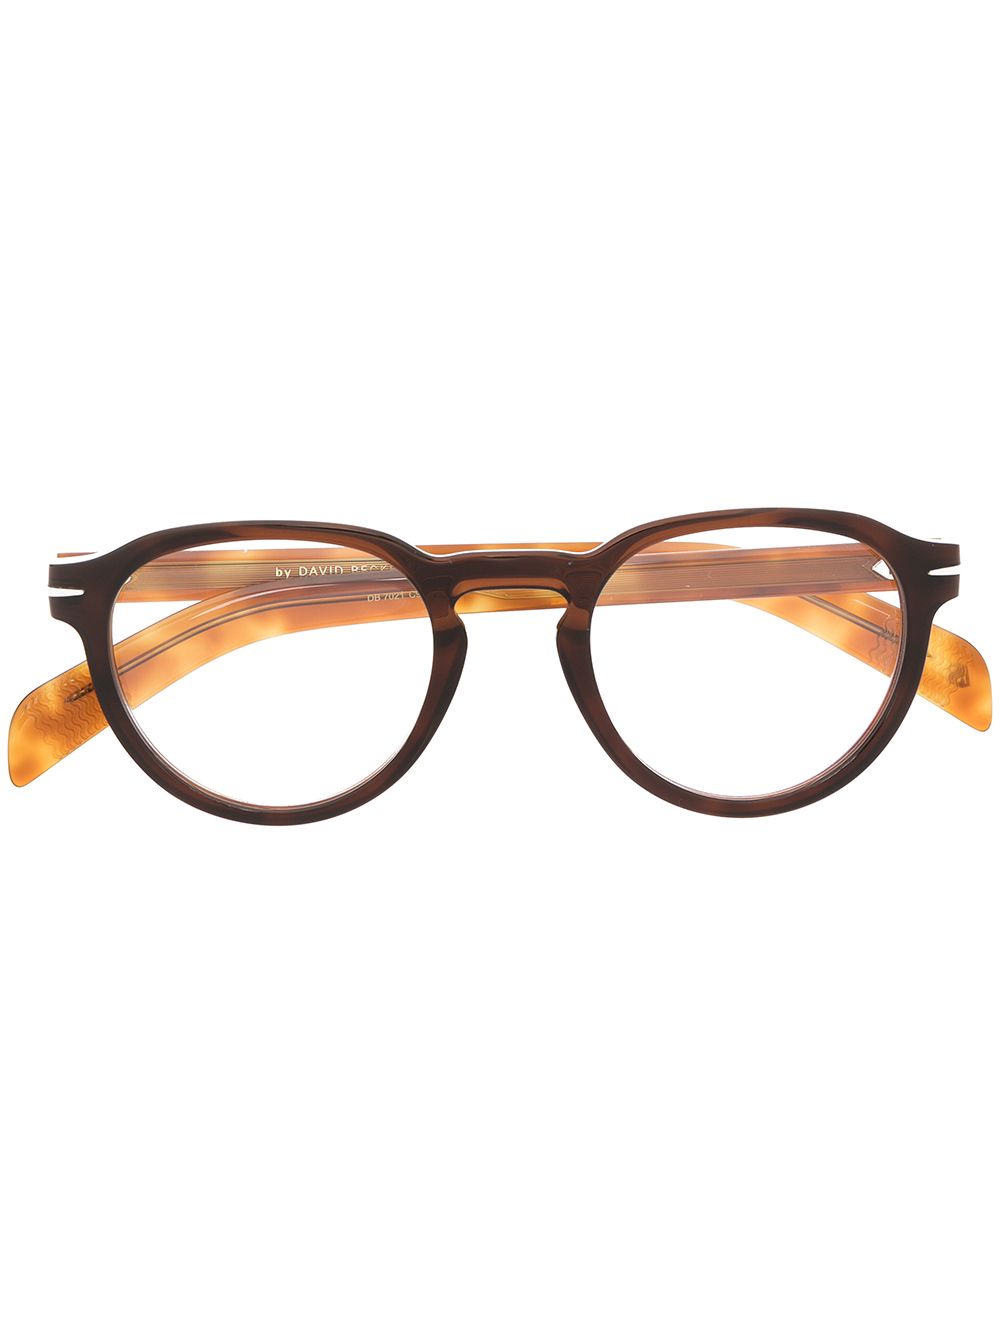 Image 1 of Eyewear by David Beckham tortoiseshell glasses